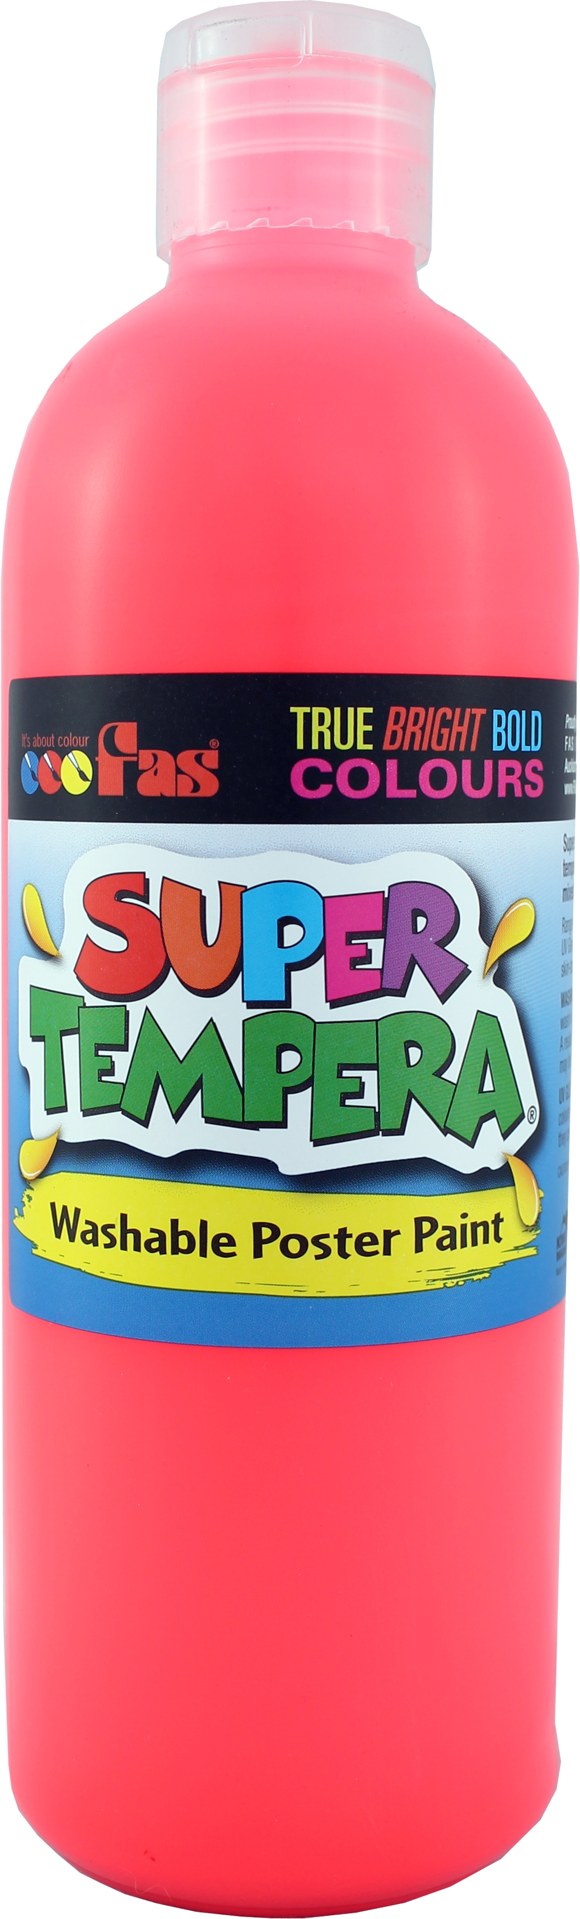 Fas Super Tempera Washable Poster Paints 250ml